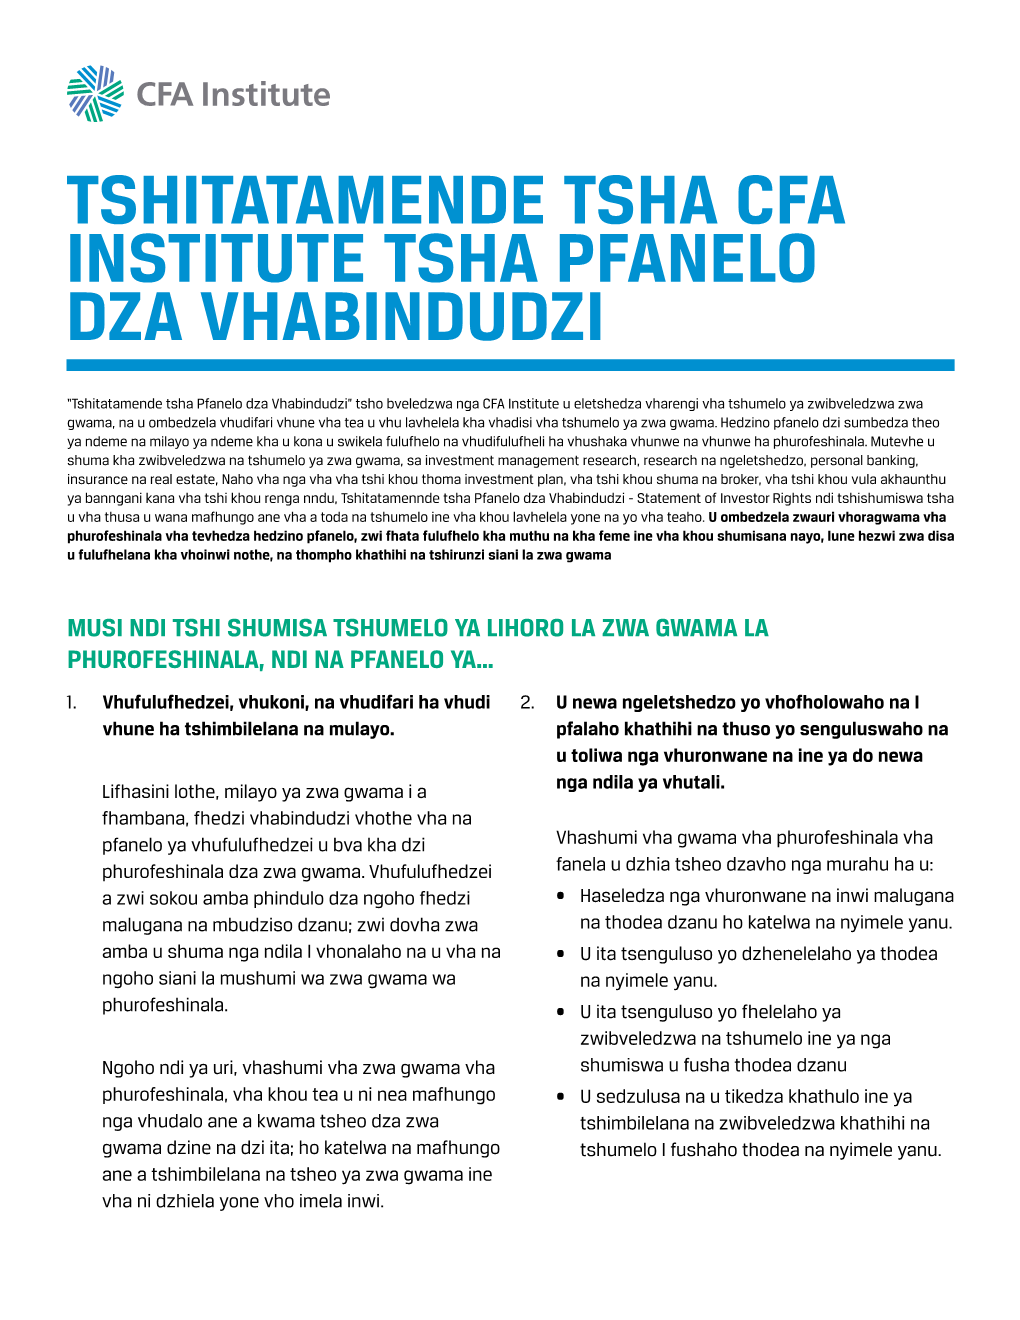 CFA South Africa Statement of Investor Rights 2018 Tshivenda.Pdf